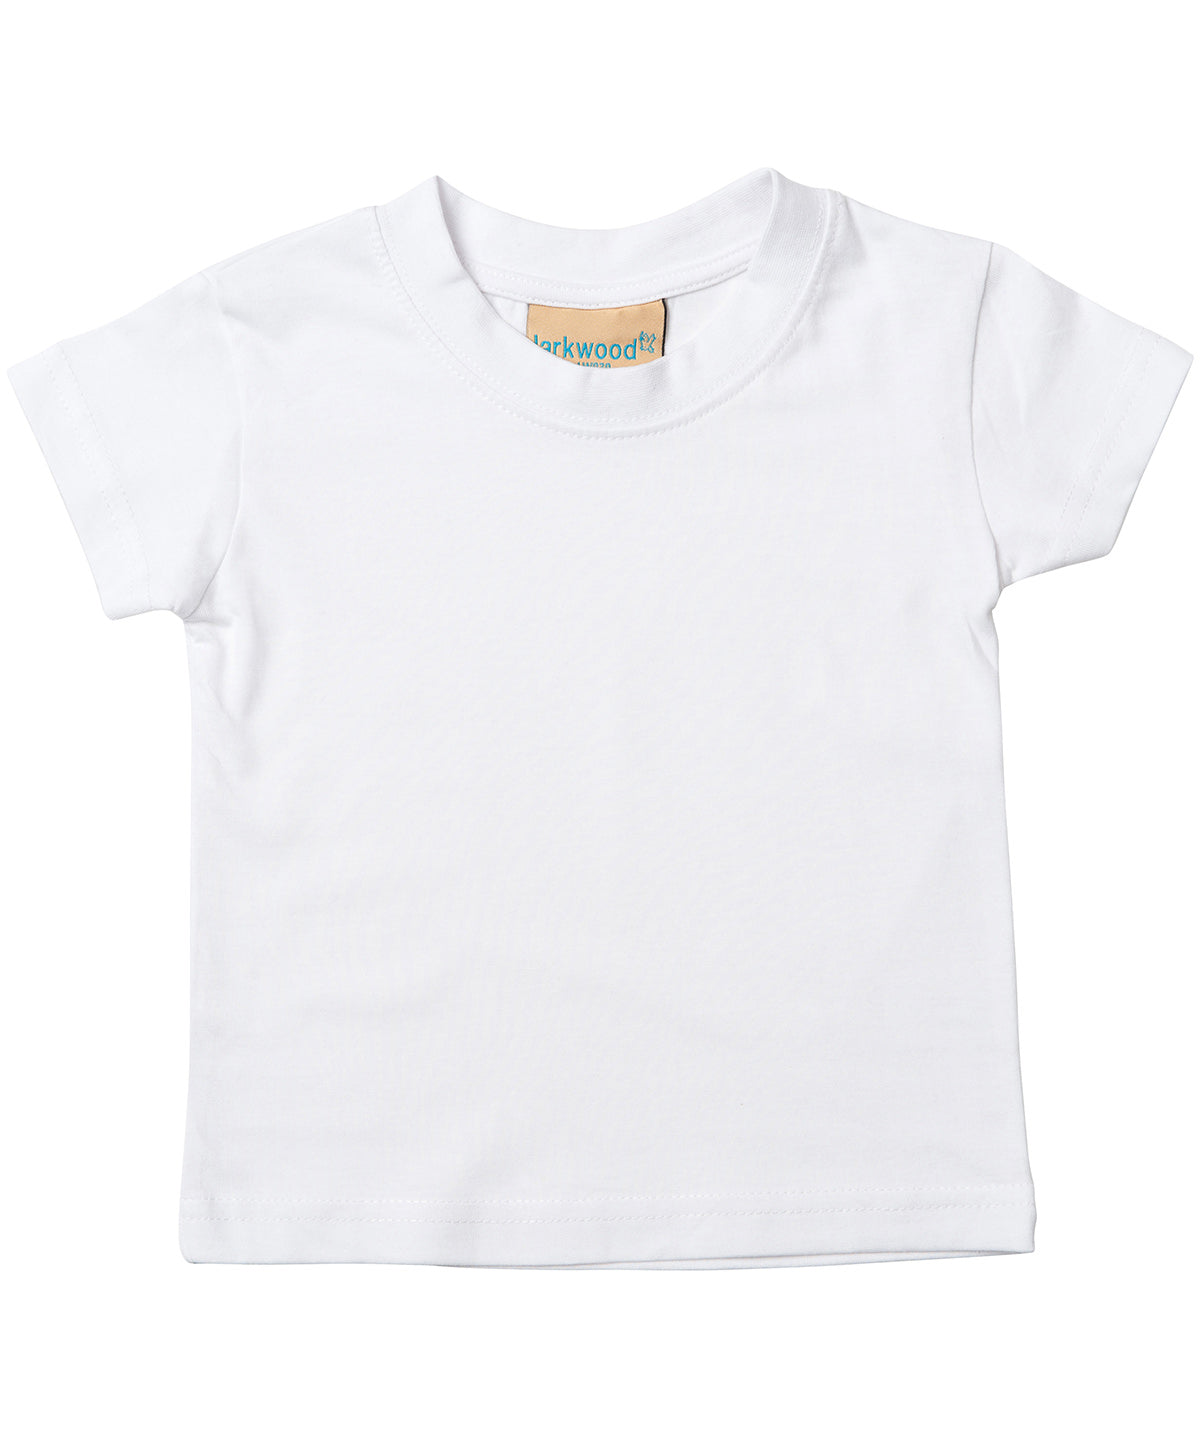 Larkwood Baby/toddler t-shirt White